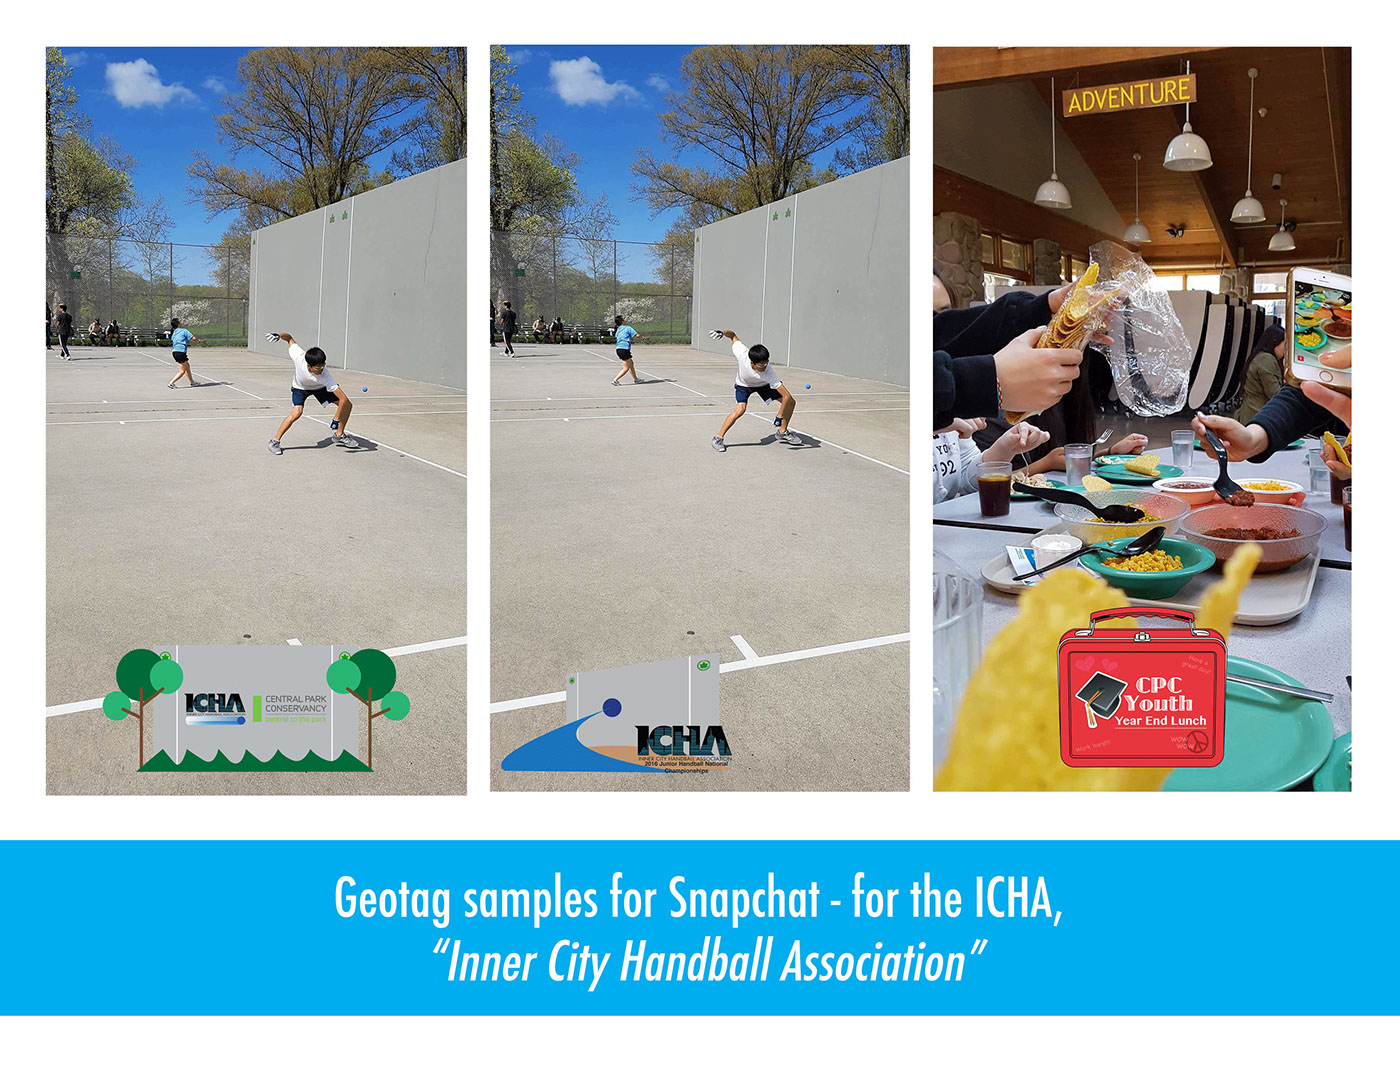 icha innercityhandballassociation handball nyc newyork geotag   snapchat Illustrator photoshop